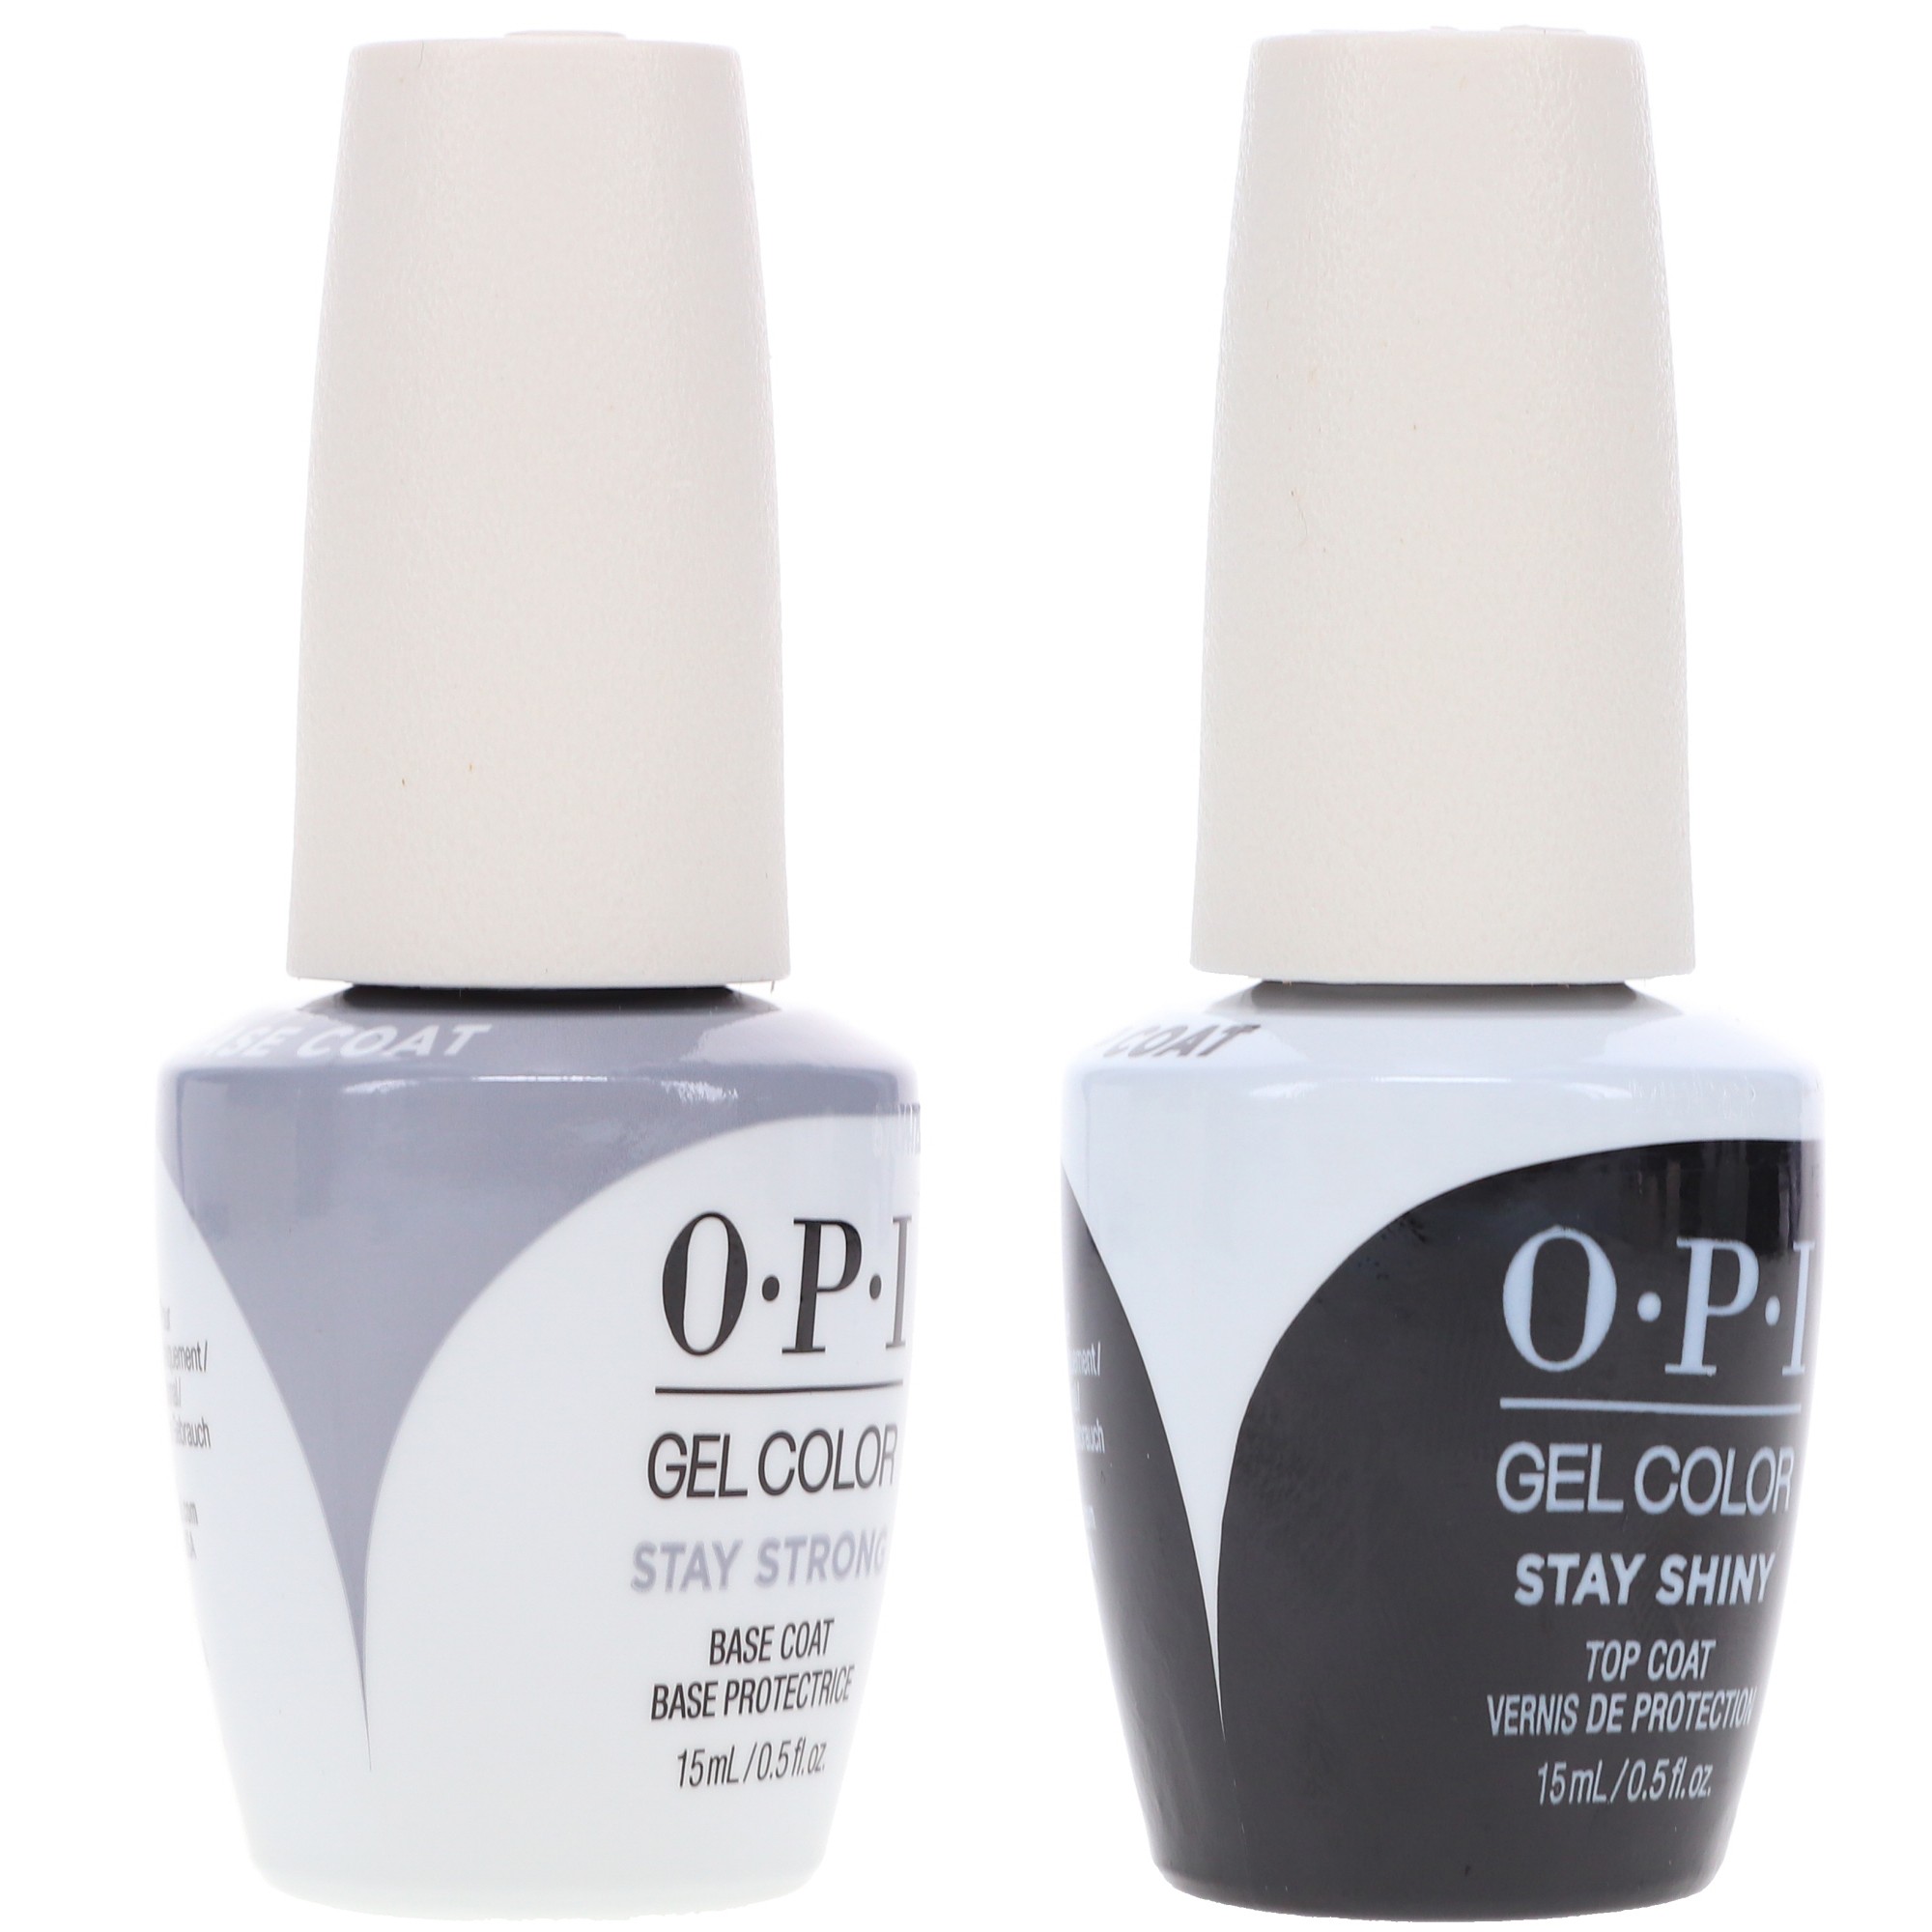 OPI GelColor Stay Shiny Top Coat Gel Nail Polish